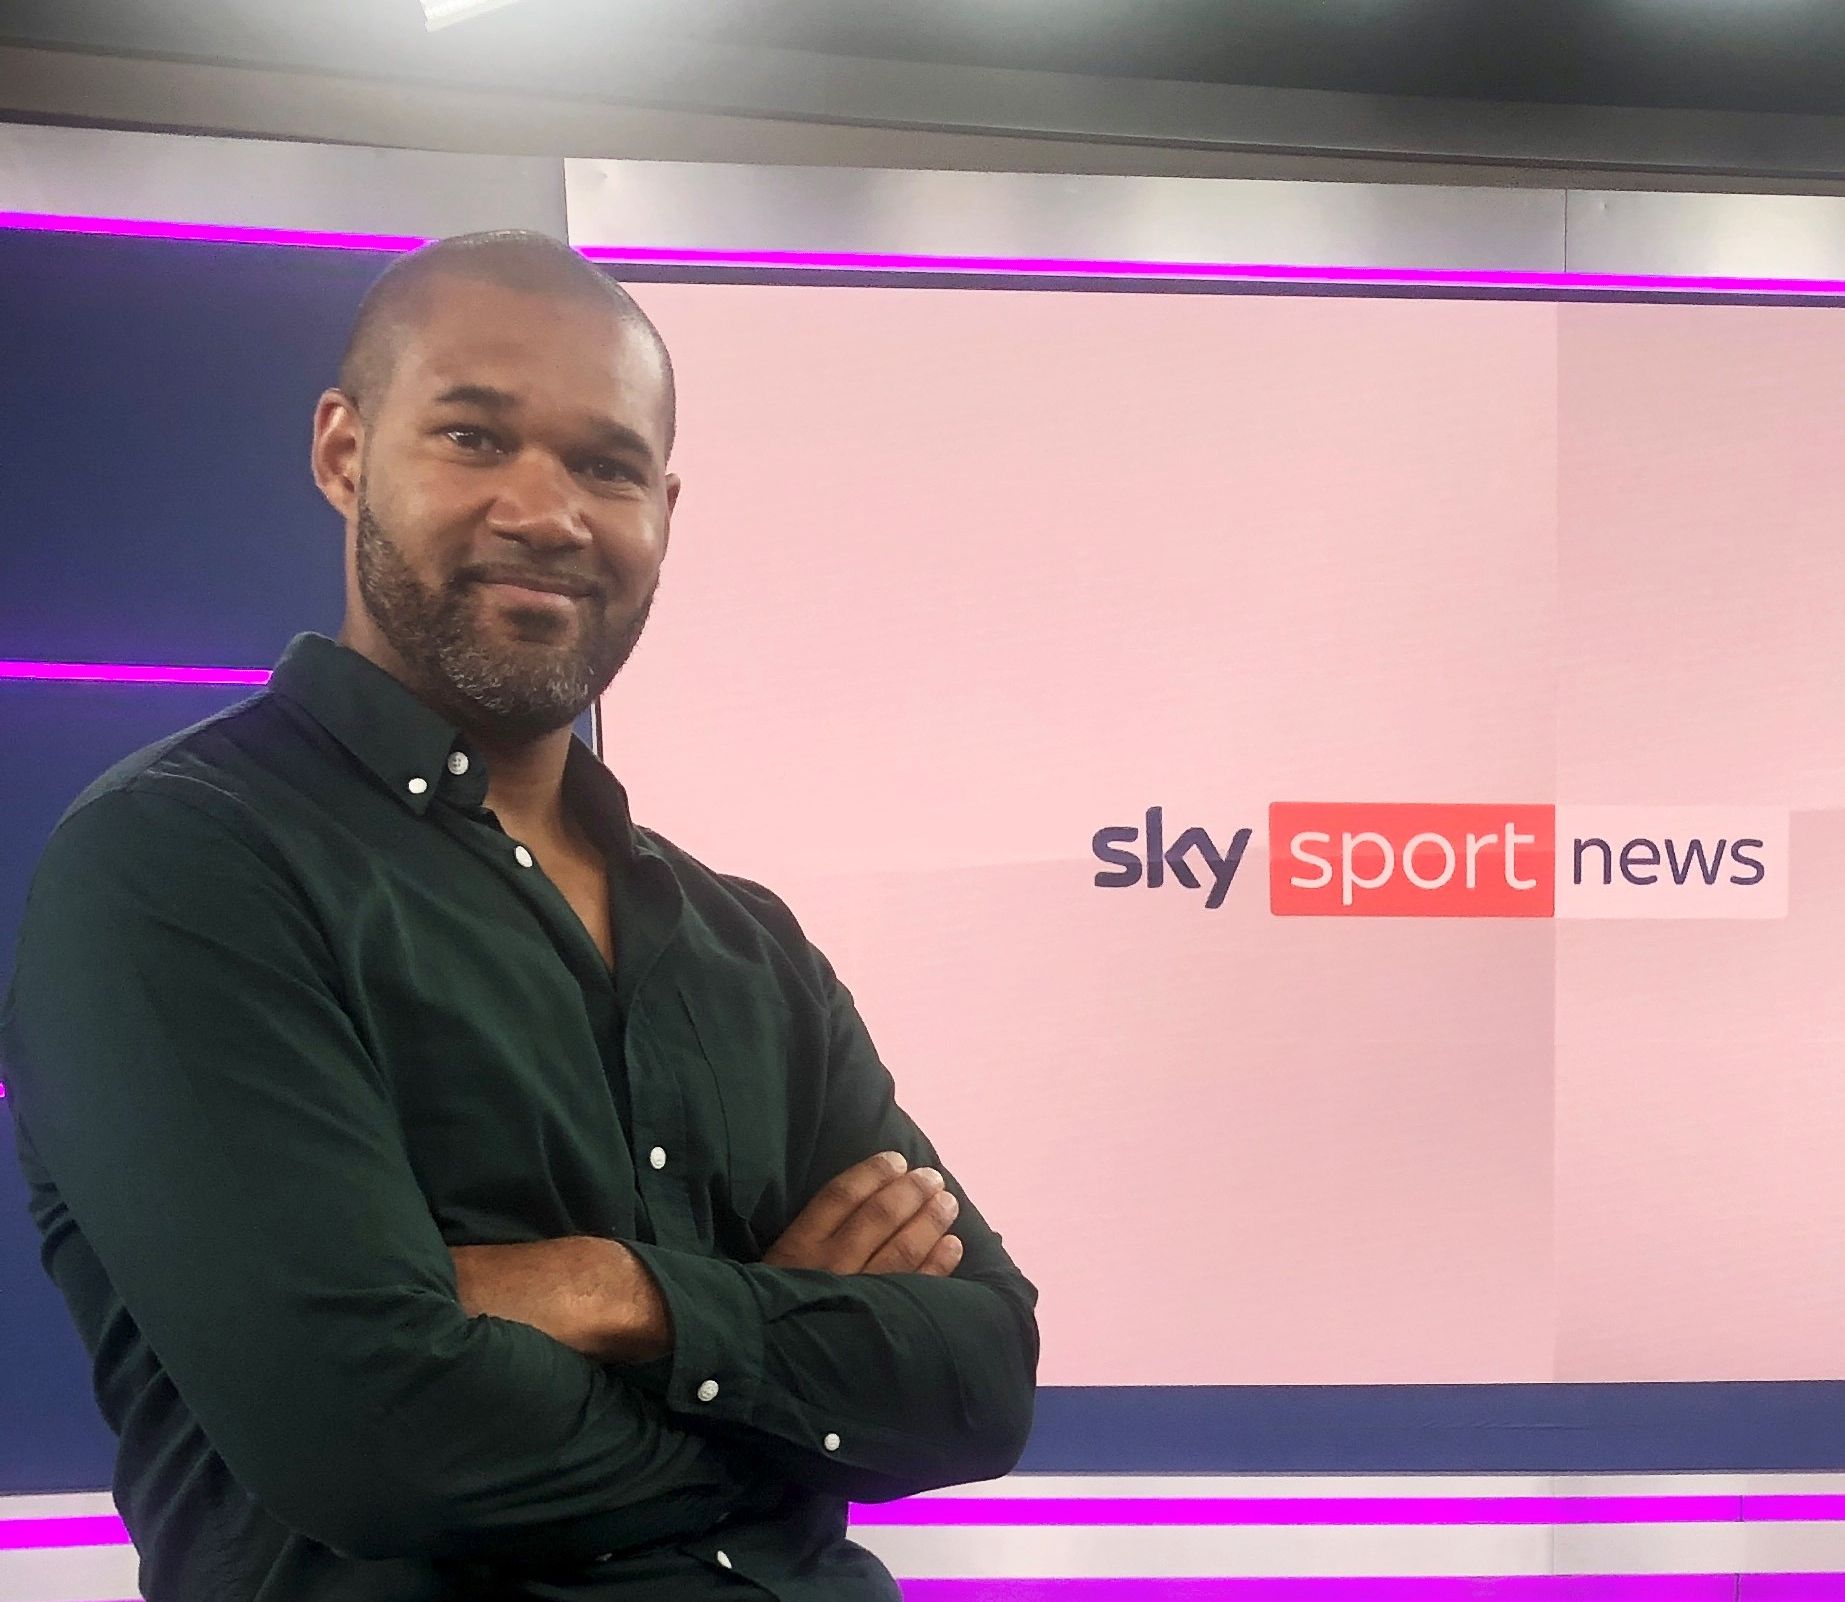 Neuzugang für Sky Sport News Albert Staudt wird Moderator beim Sportnachrichtensender Presseportal